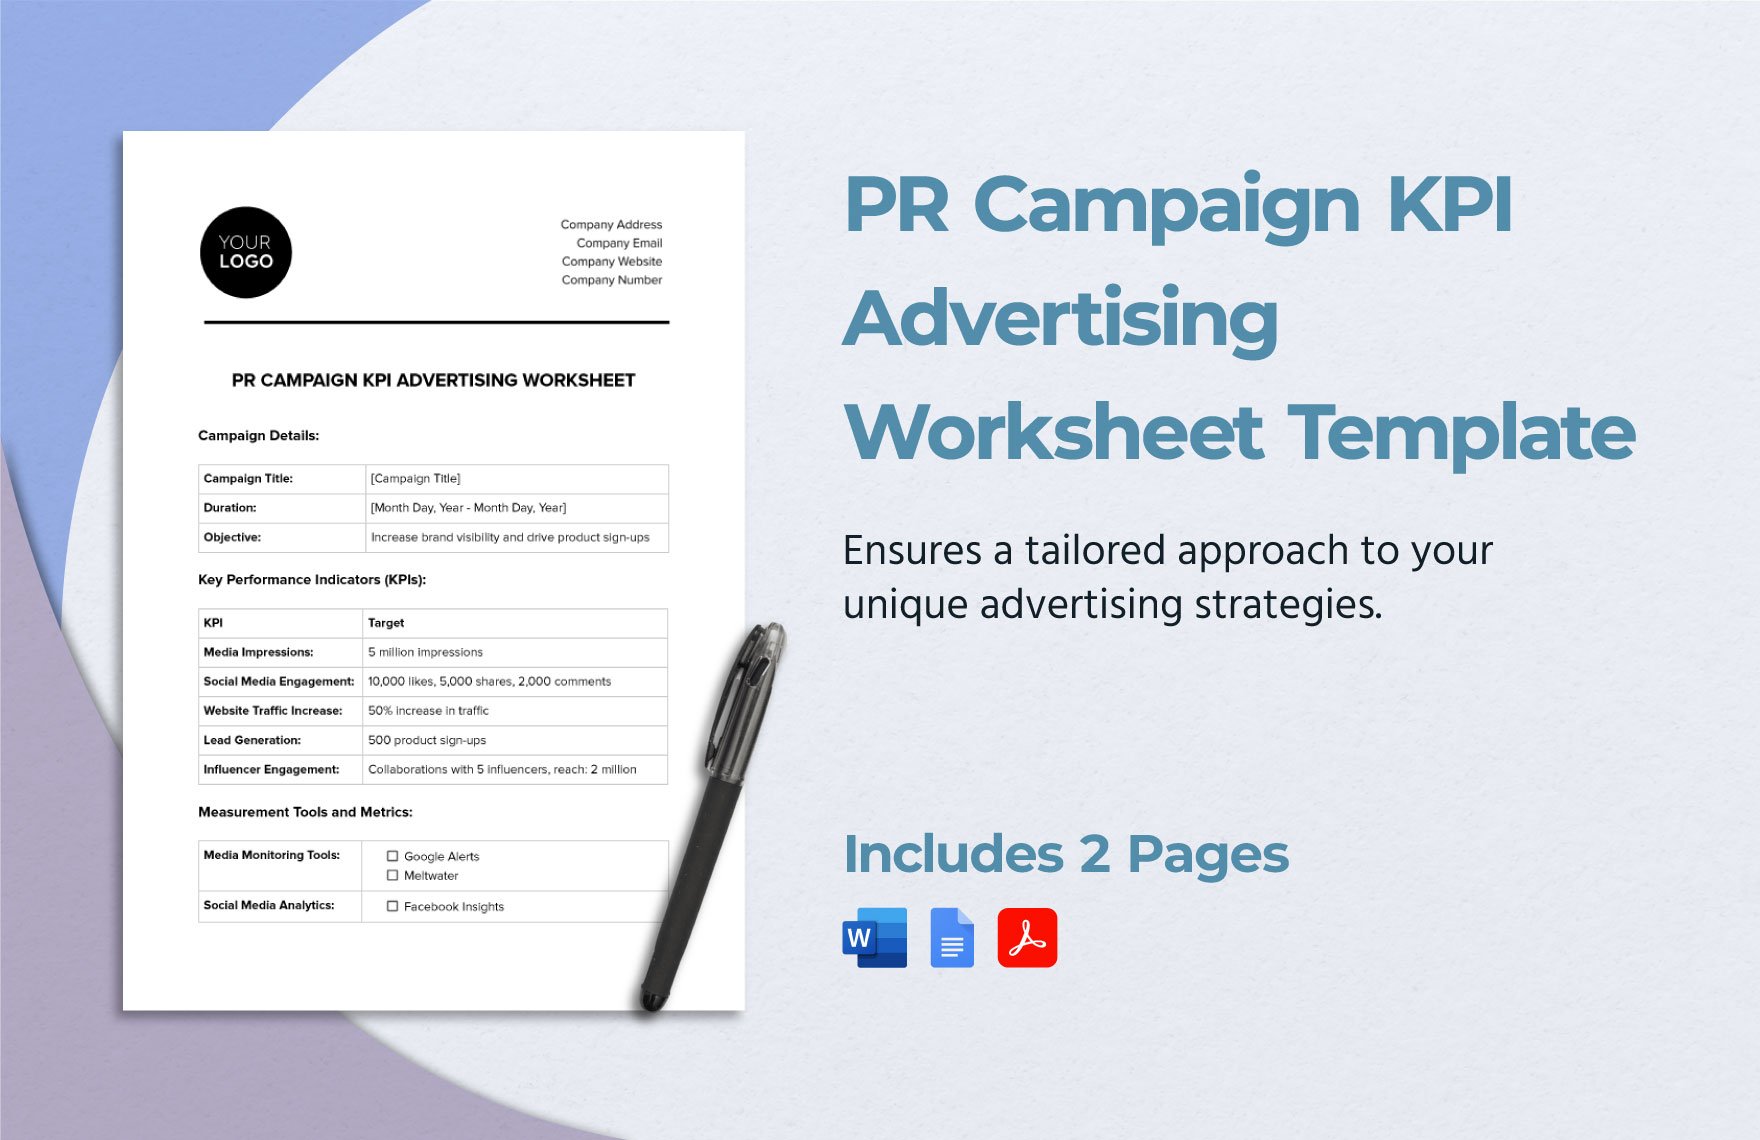 PR Campaign KPI Advertising Worksheet Template in Word, Google Docs, PDF